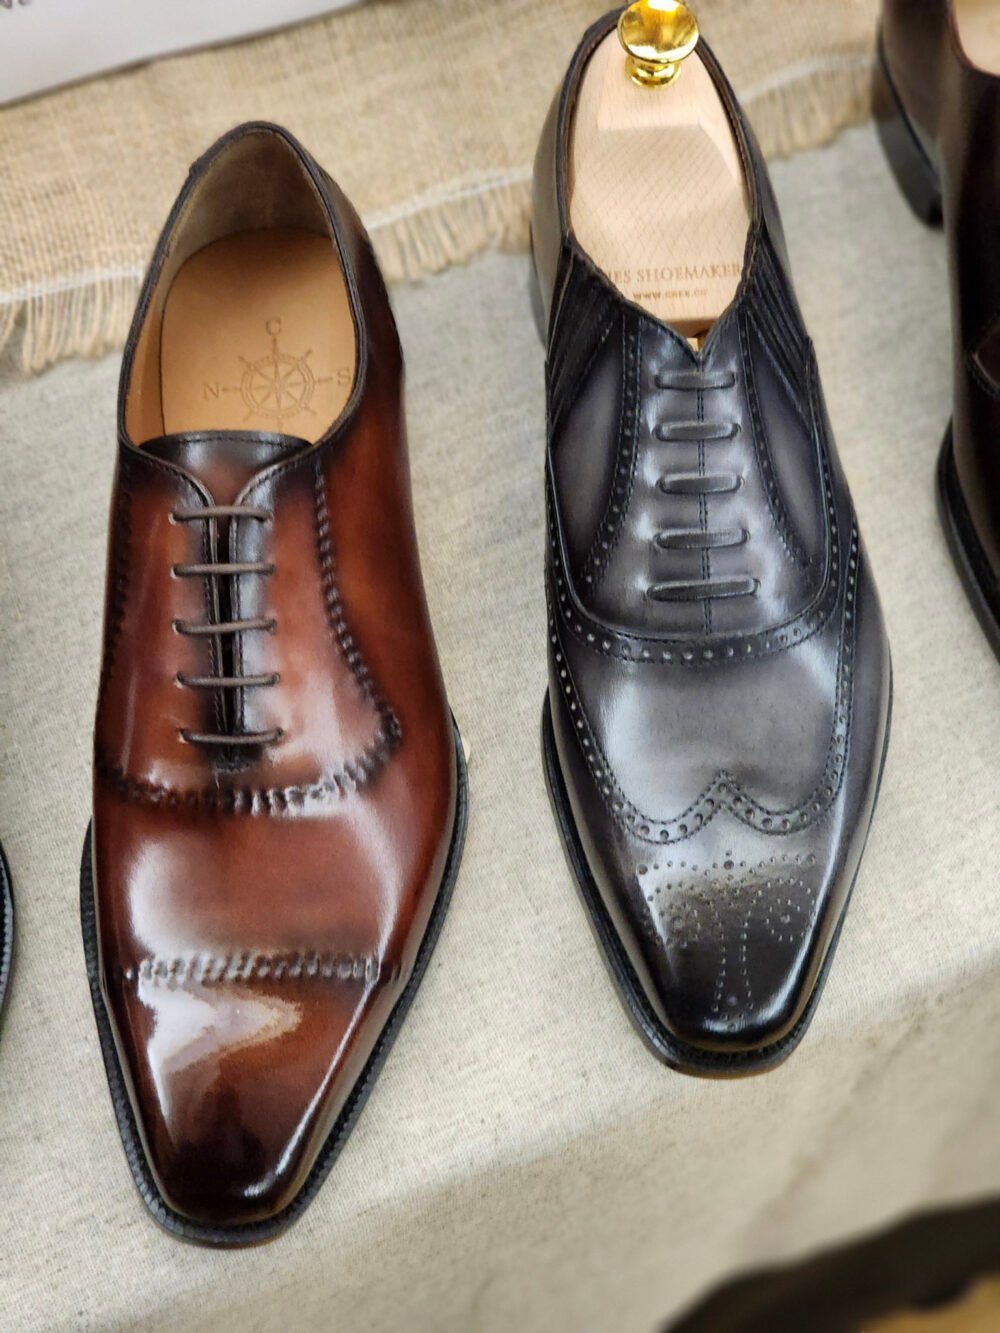 New Models CNES Shoemaker